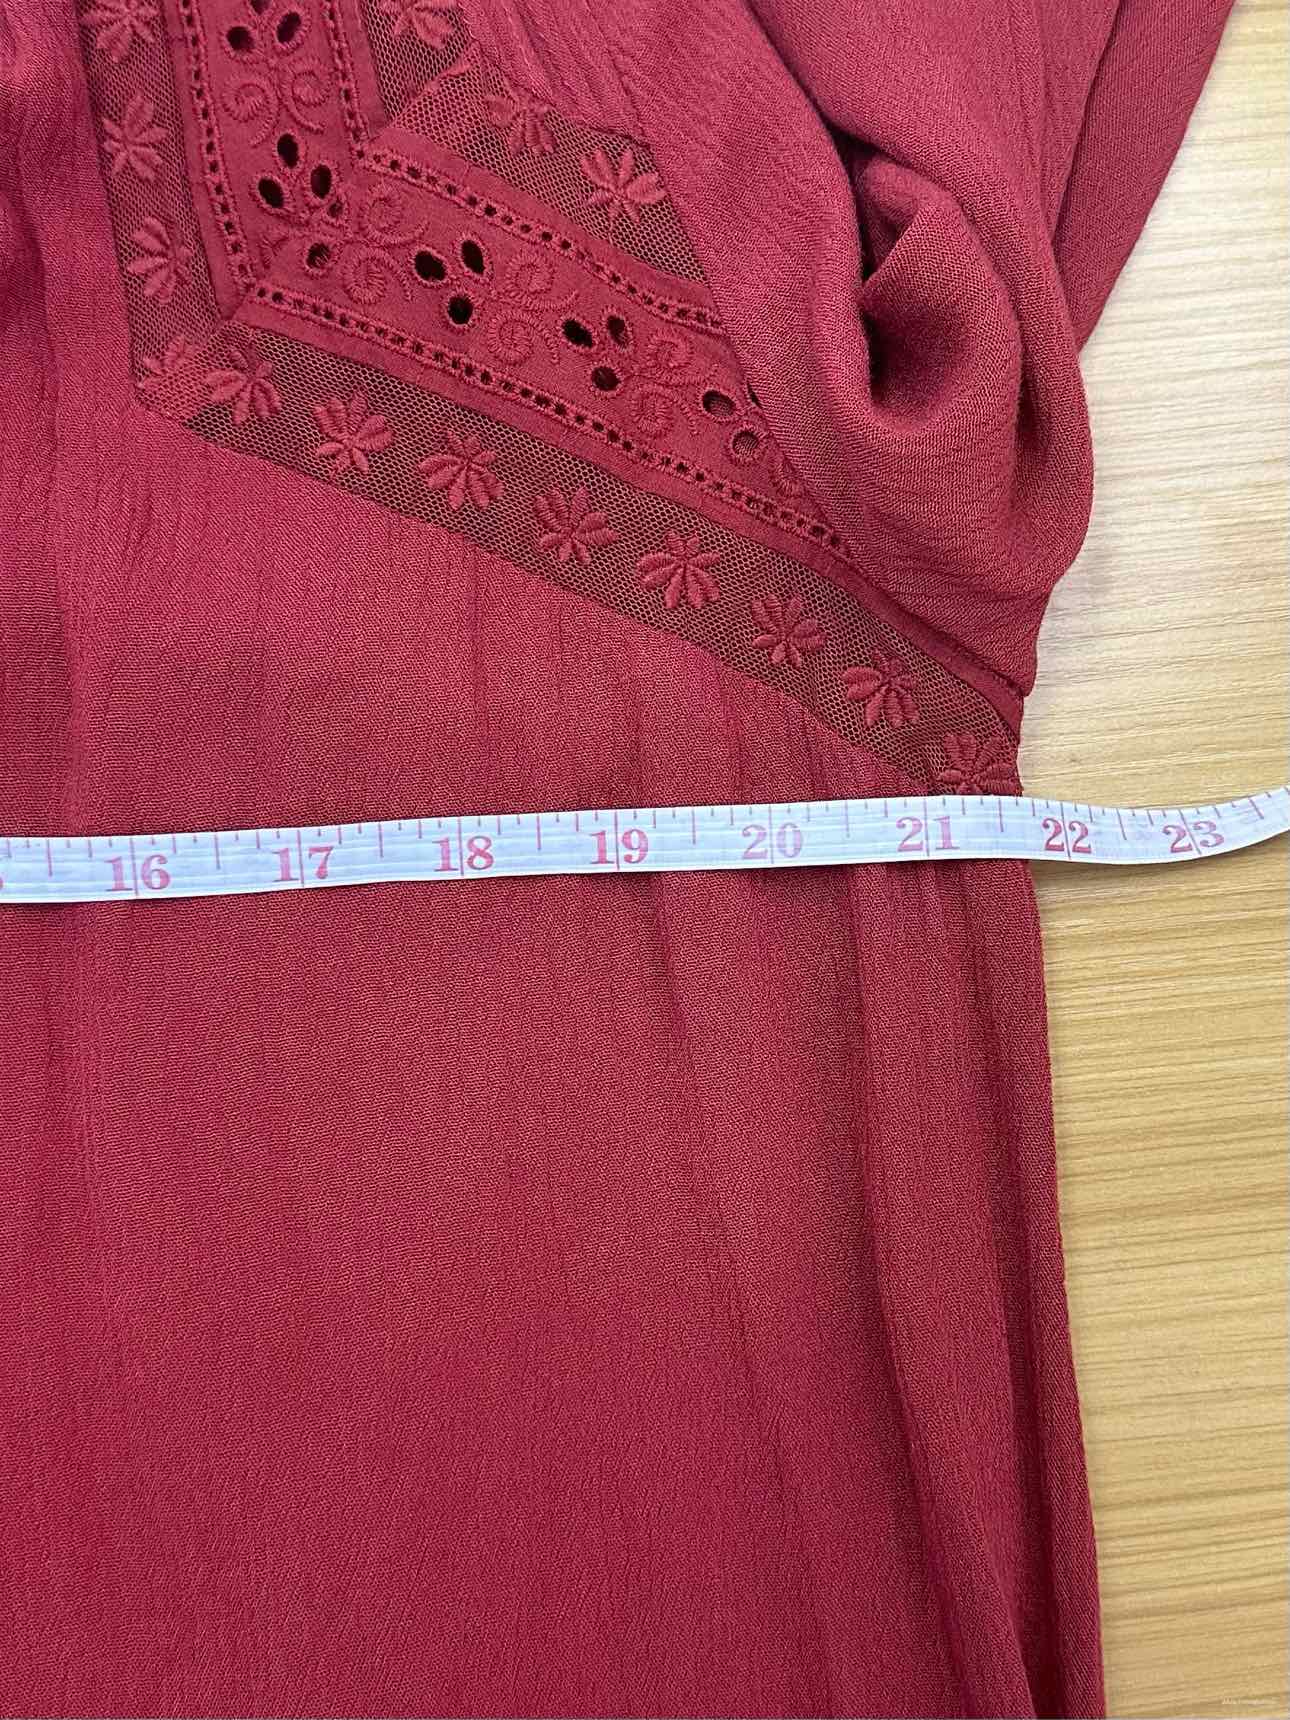 Free People Red Crochet Trim Dress Size XS